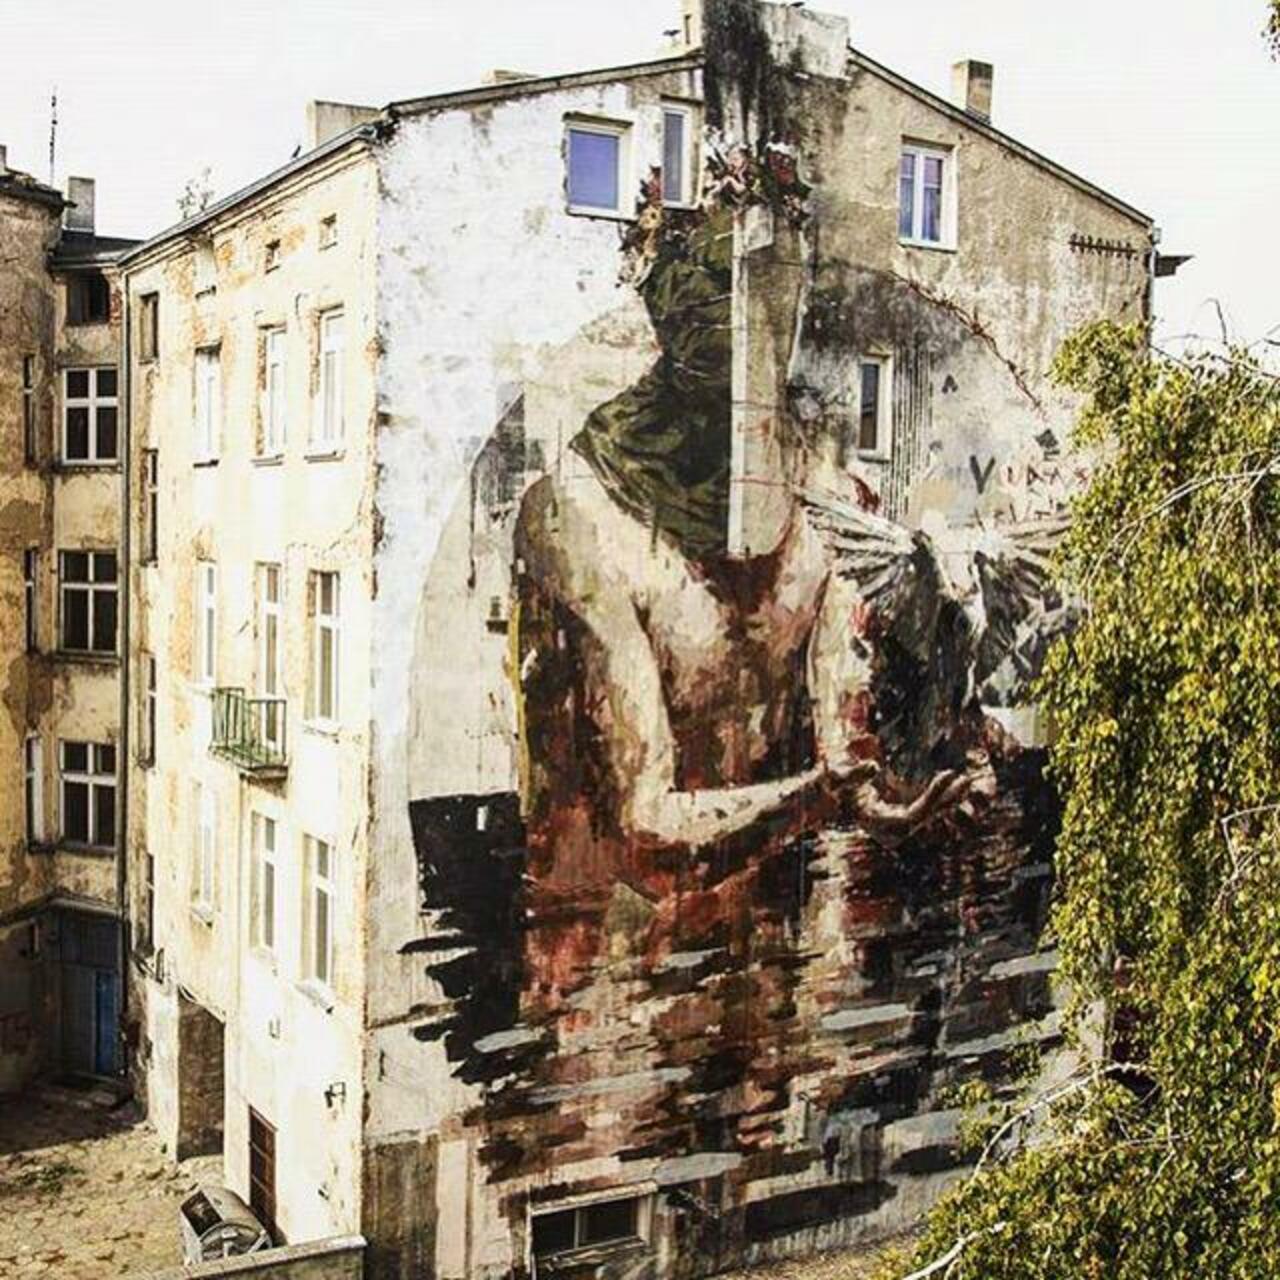 The great #Borondo for @lodzmurals in Lodz, #Poland #streetart #graffiti #art http://t.co/KP5BG9QcId